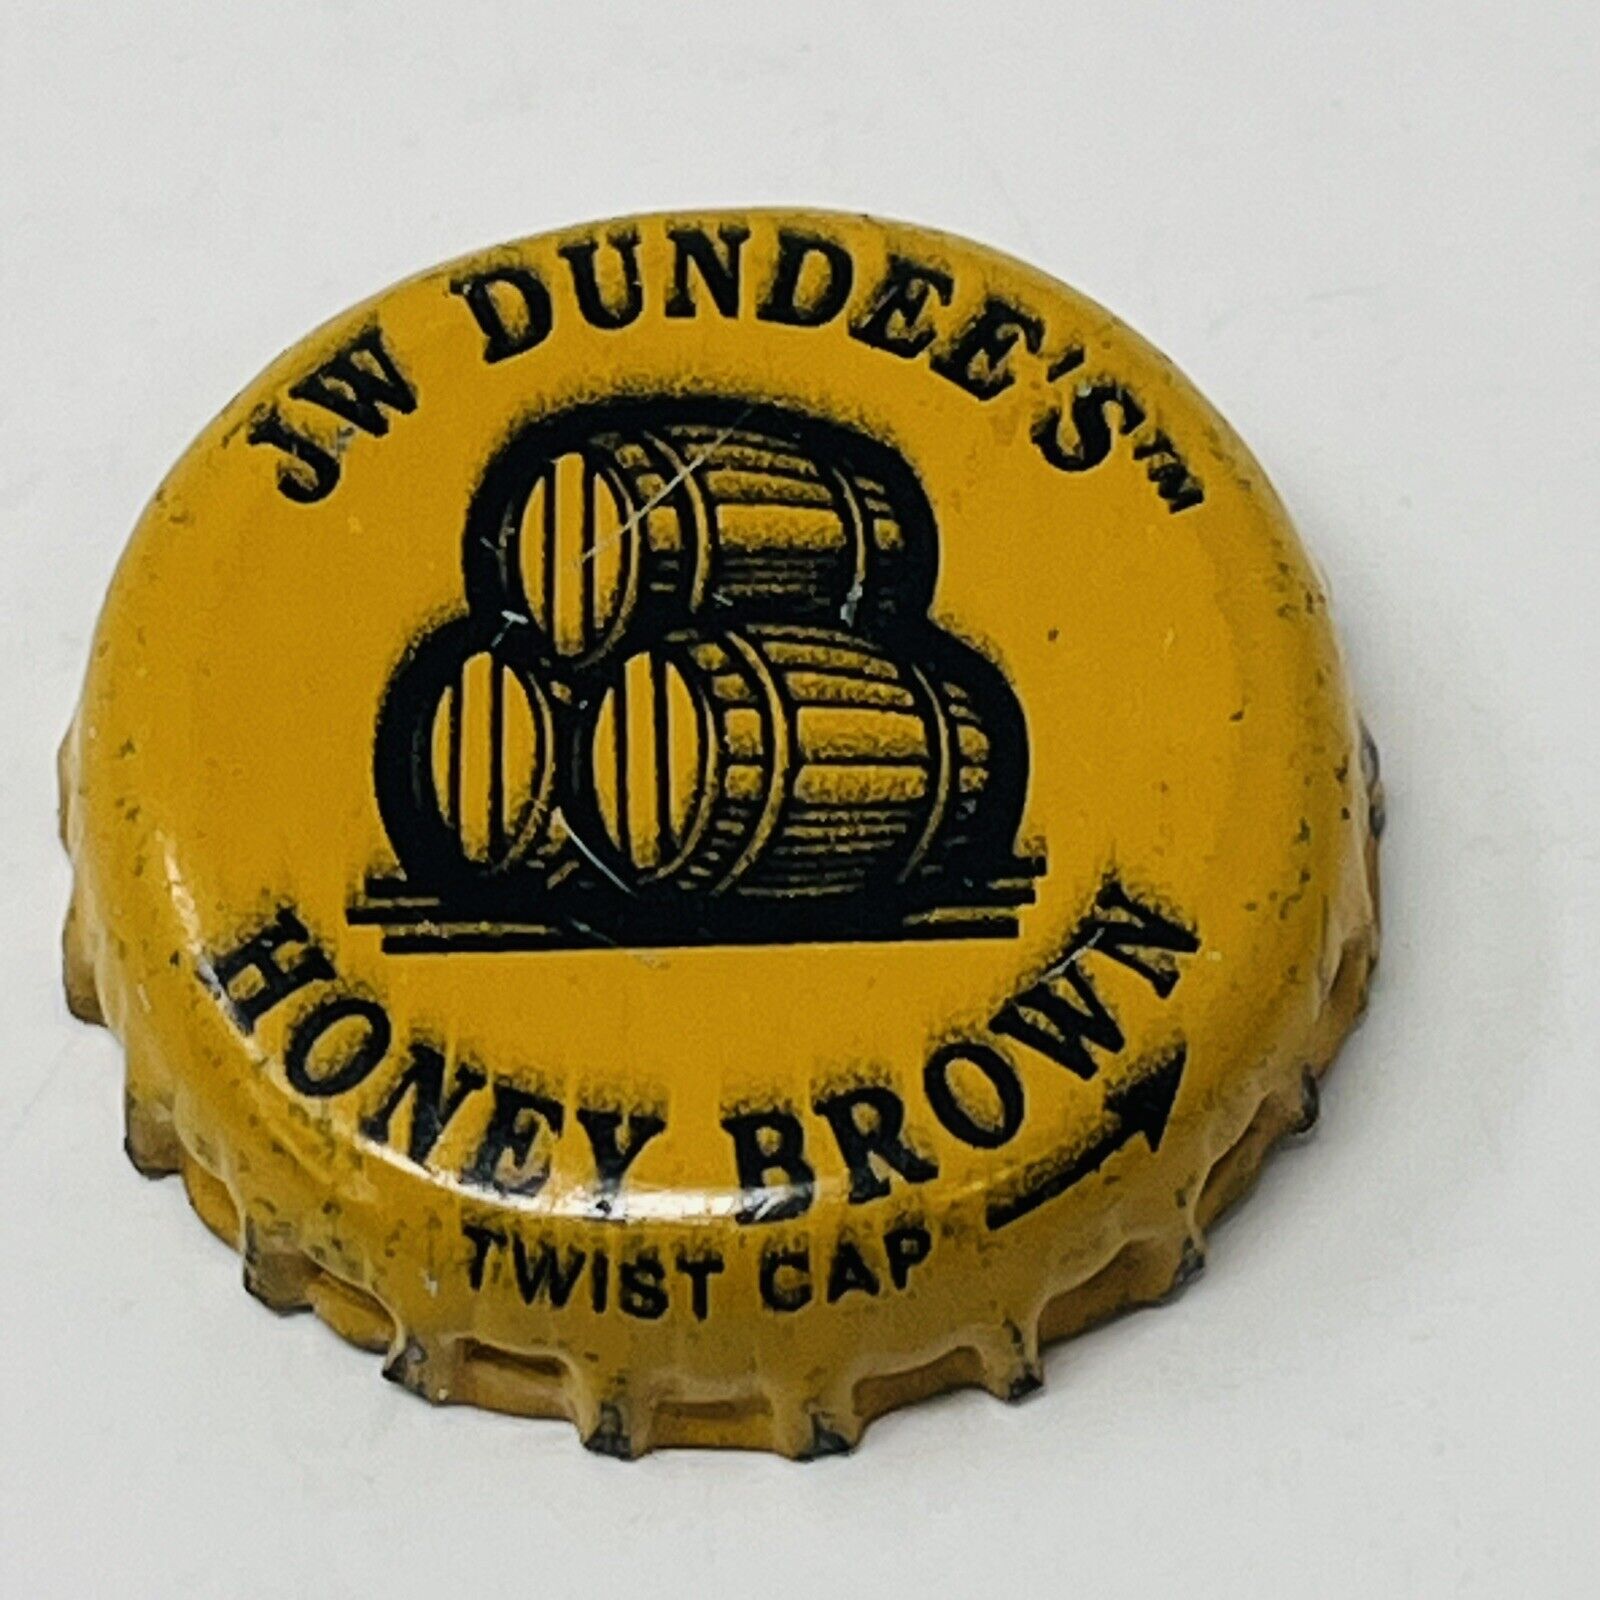 JW J W Dundee\'s Honey Brown Beer Beverage Bottle Twist Cap Vintage Barrel